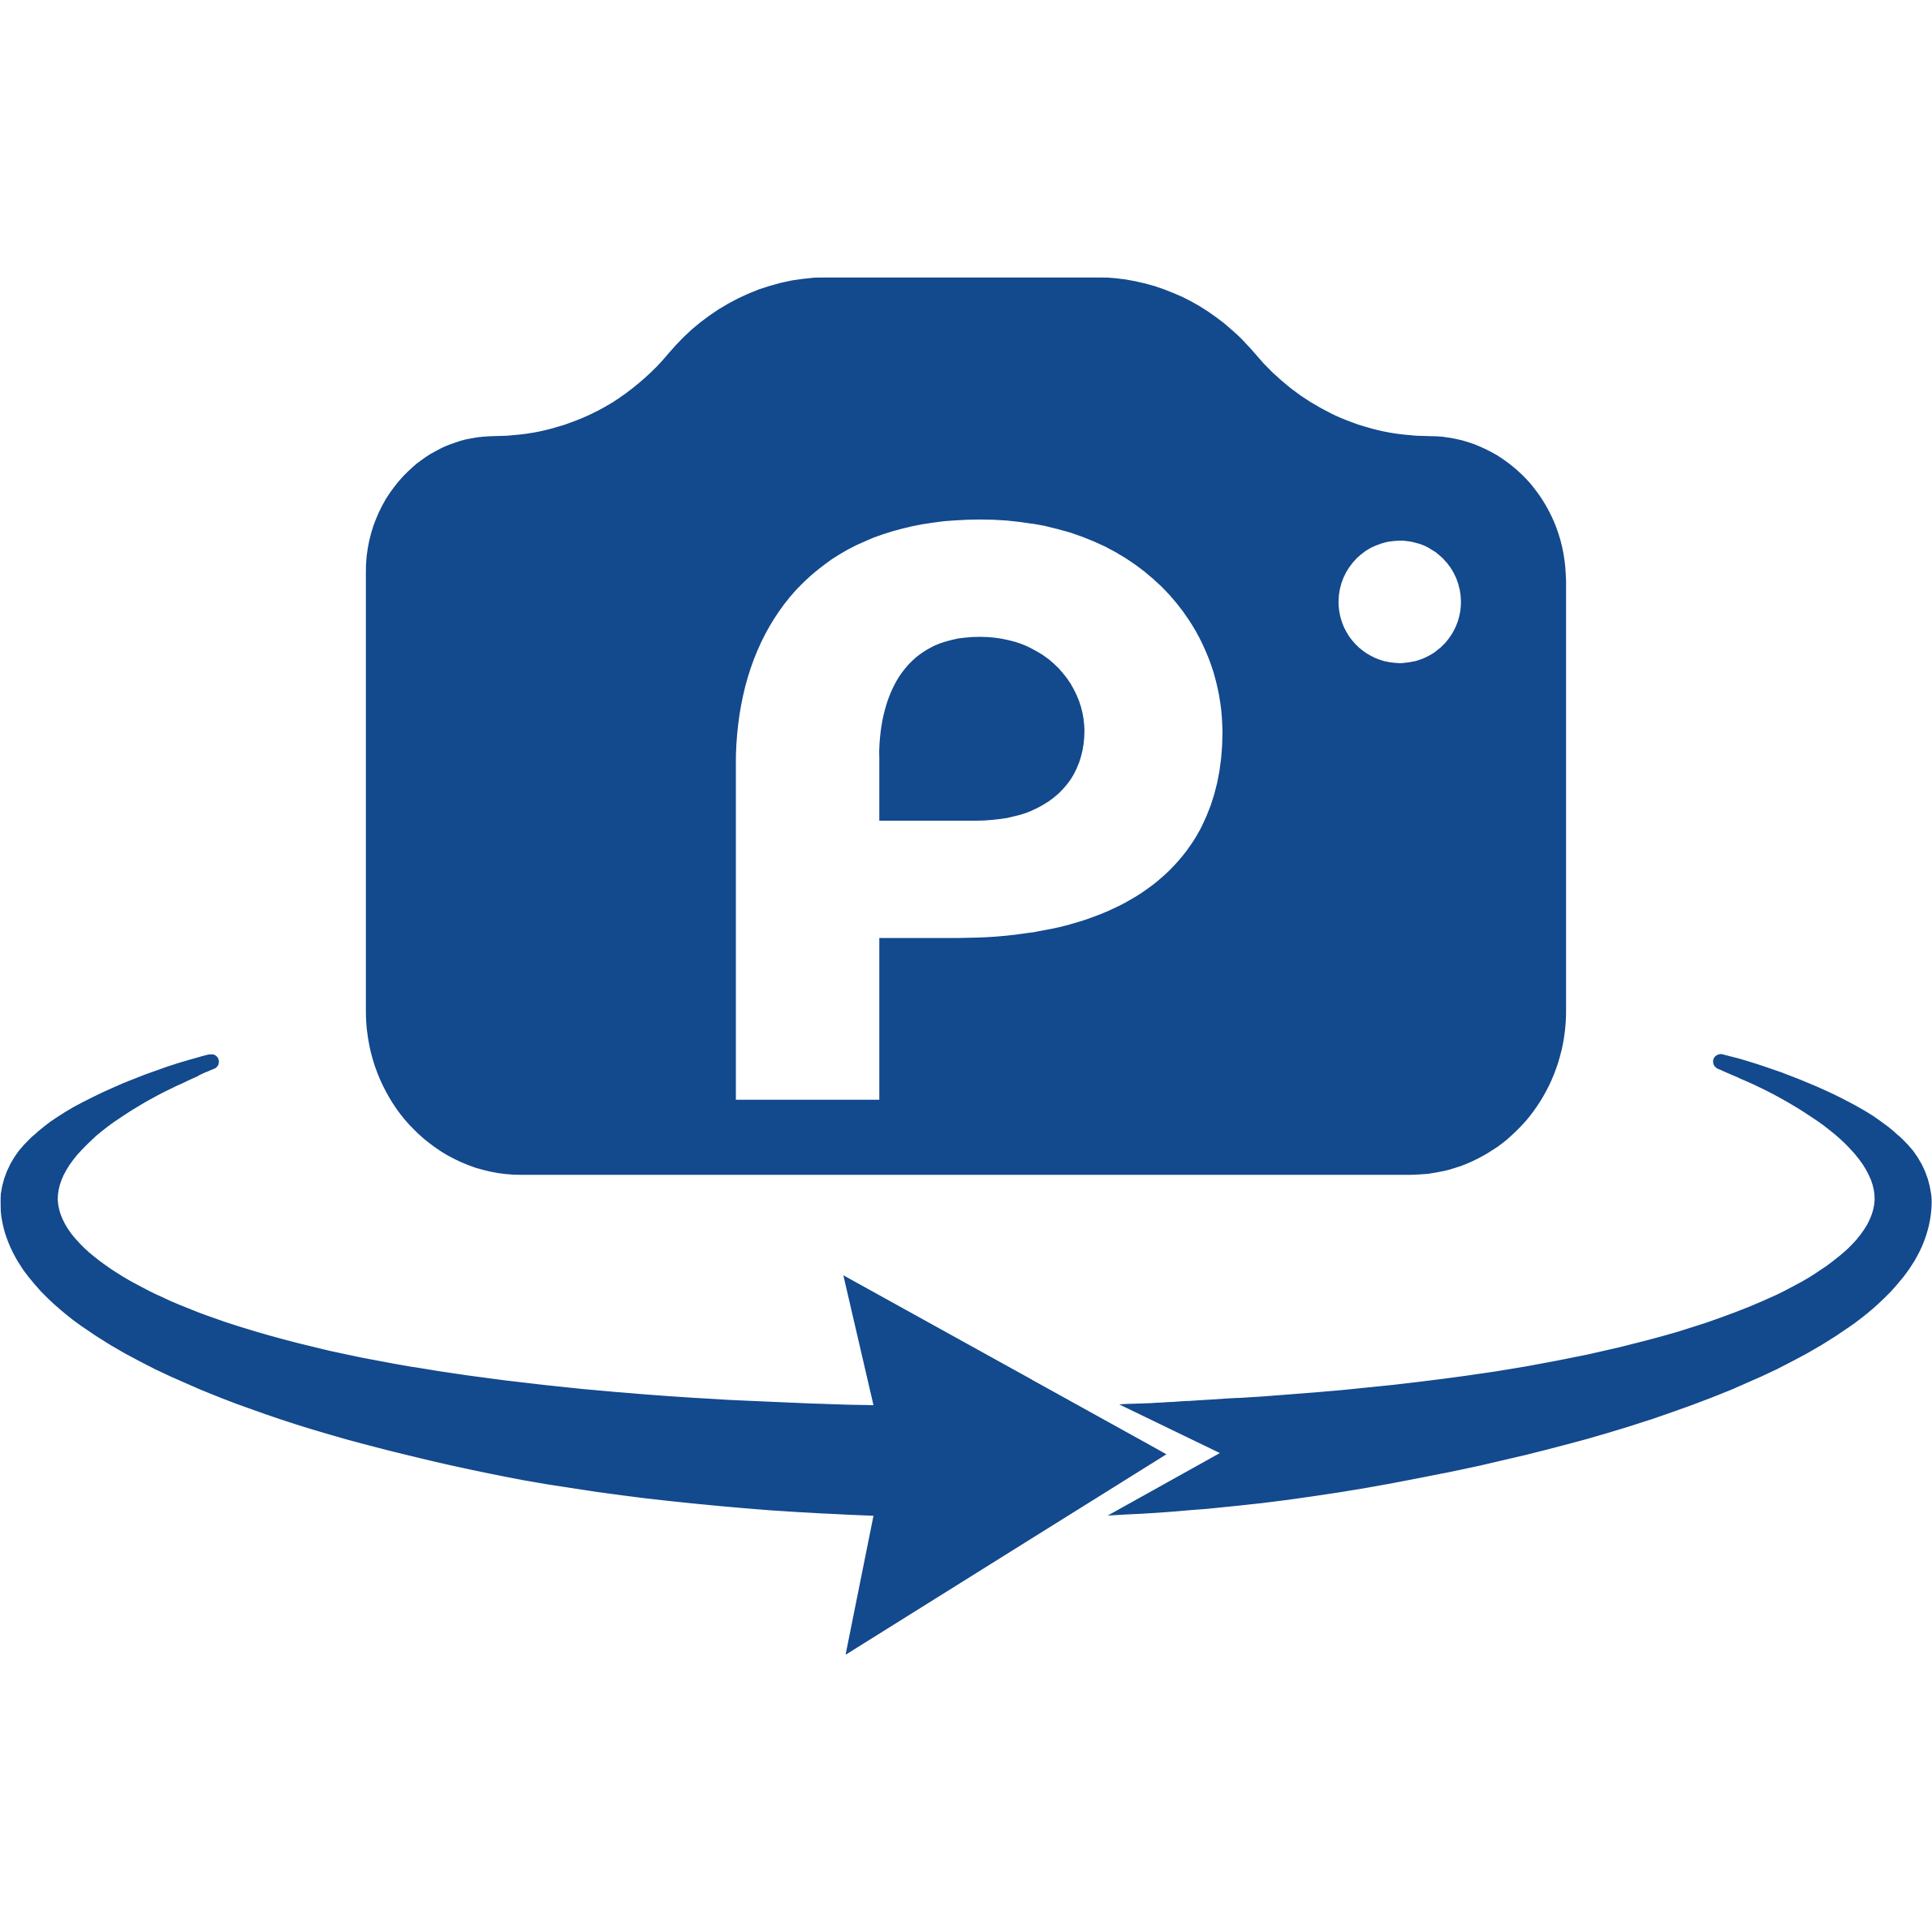 panolist logo